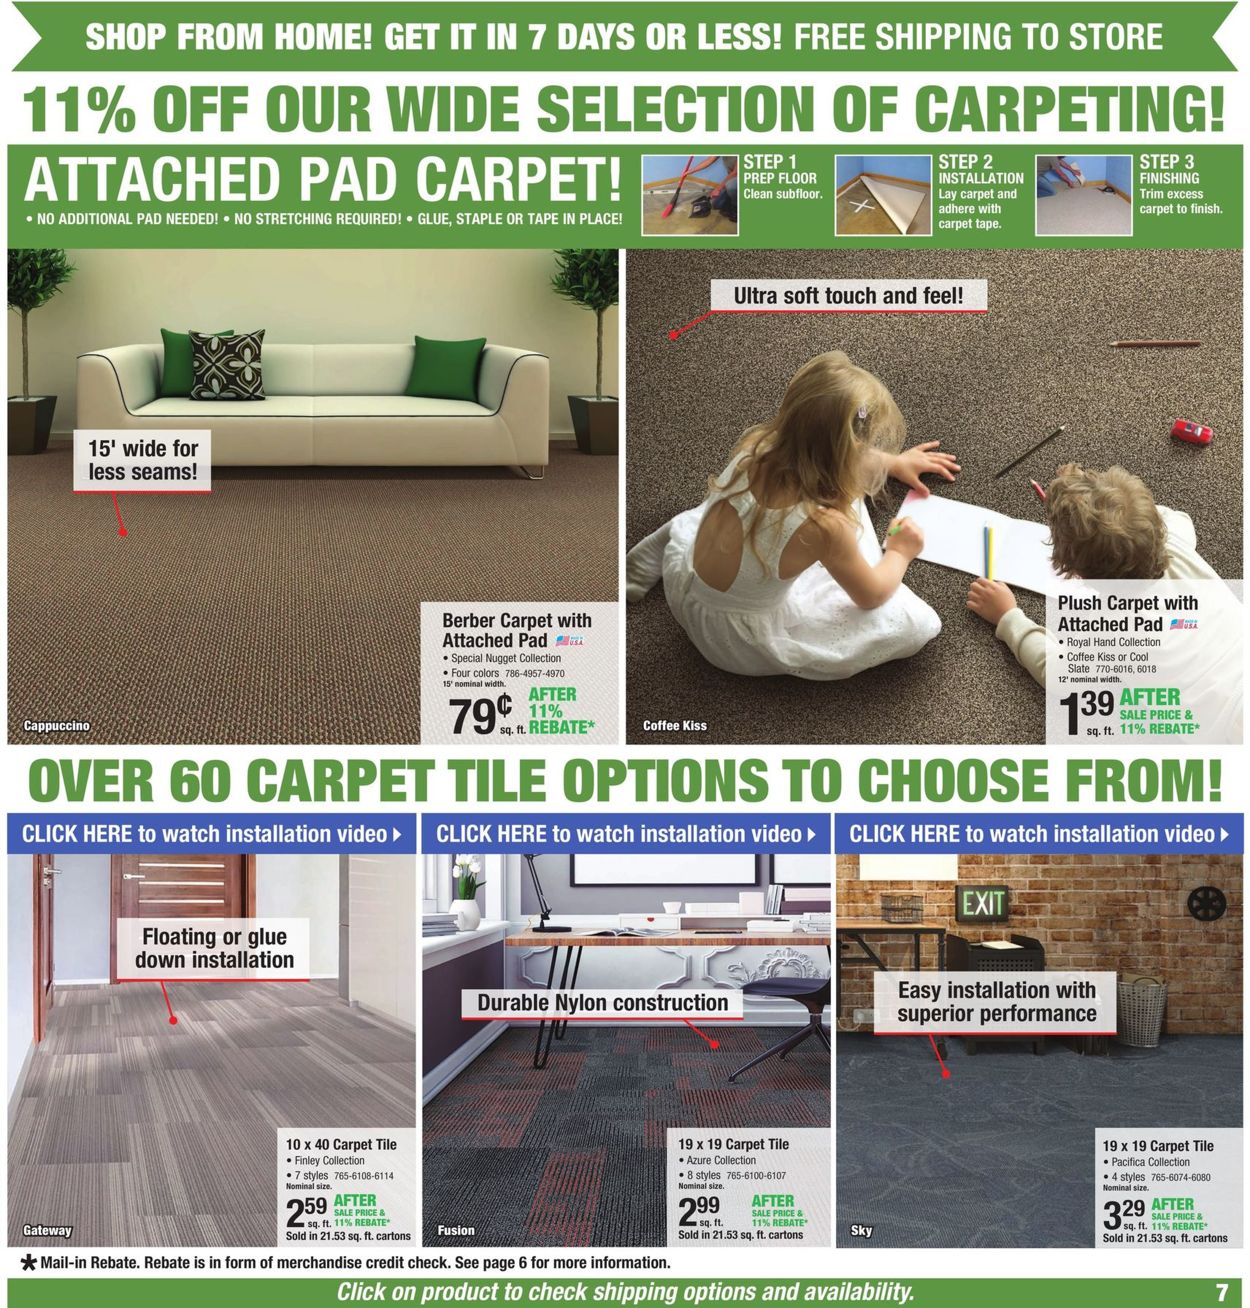 Menards Cur Weekly Ad 10 11 17, Menards Carpet Tile